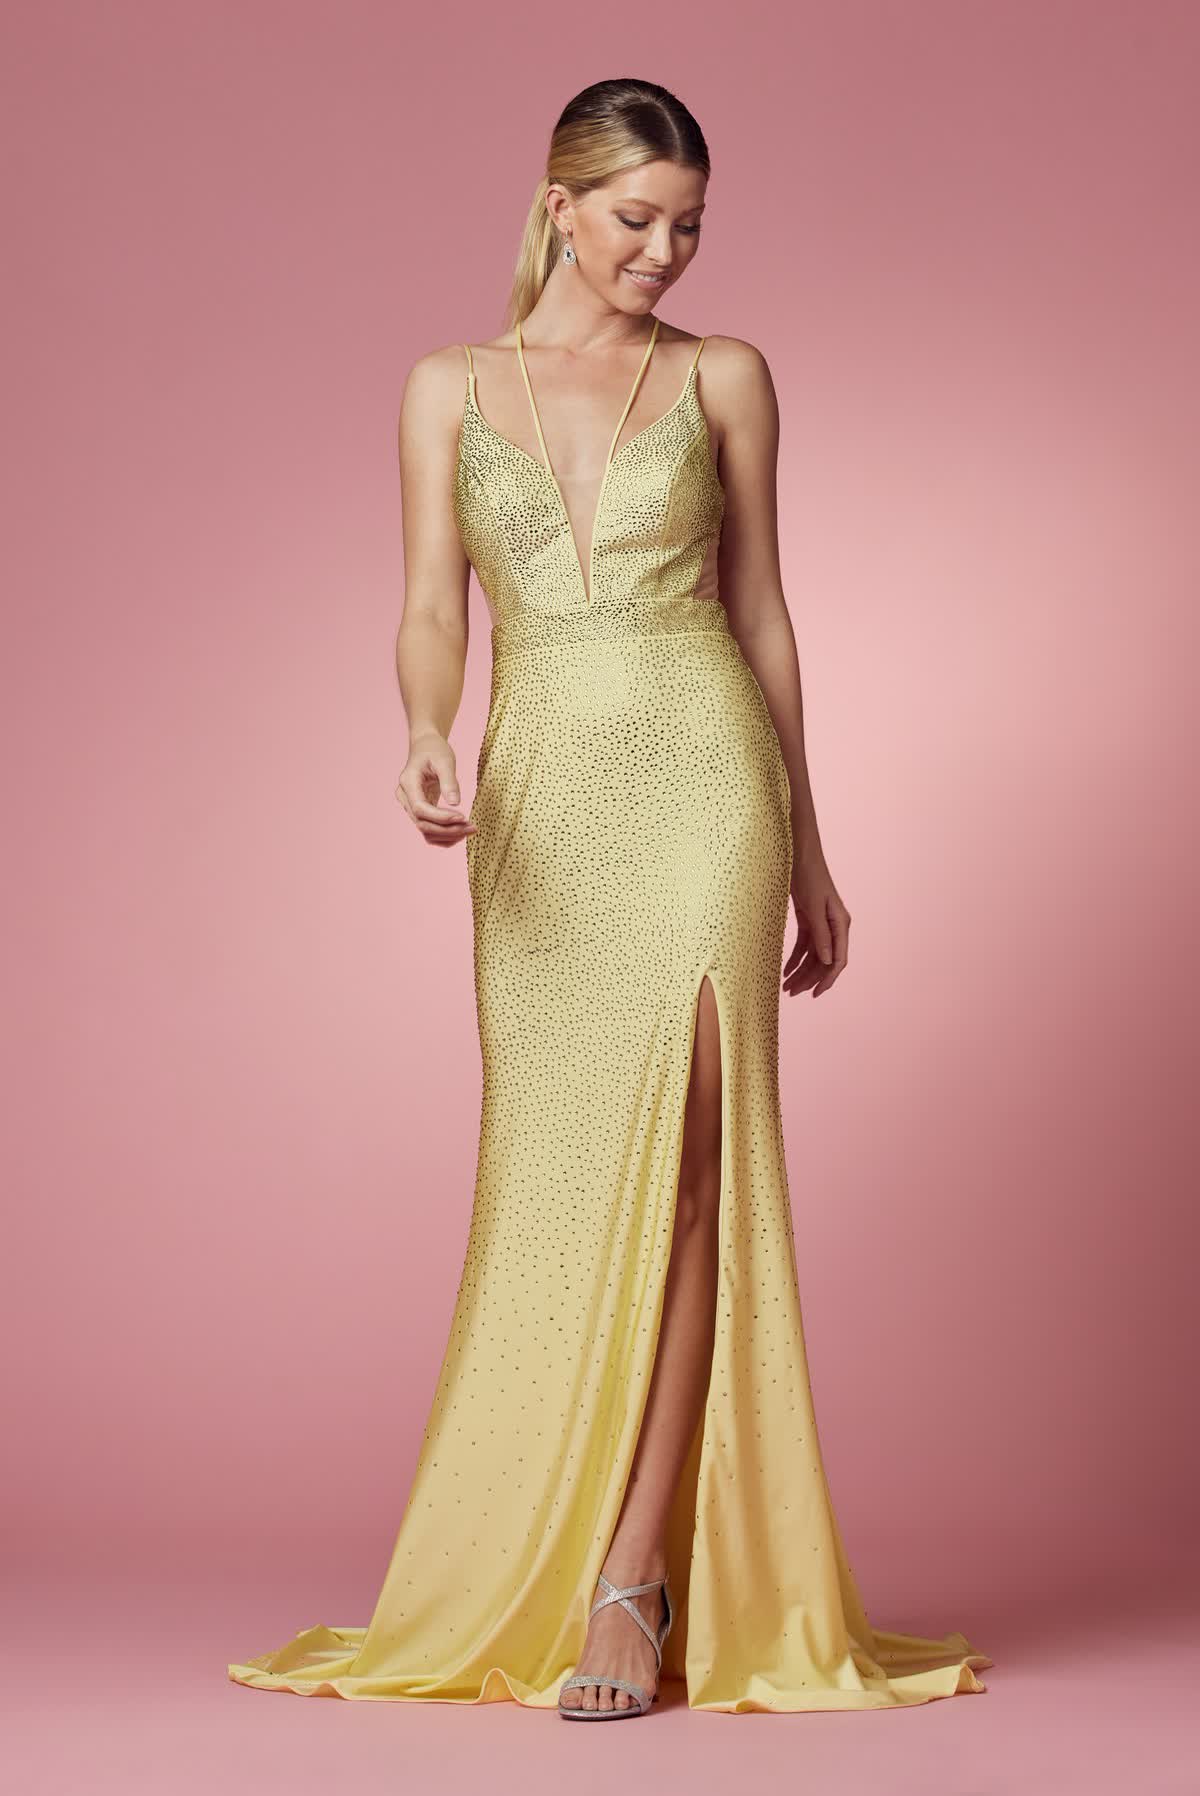 Embellished Beads High Neck Long Bridesmaid & Prom Dress NXE1003-Prom Dress-smcfashion.com